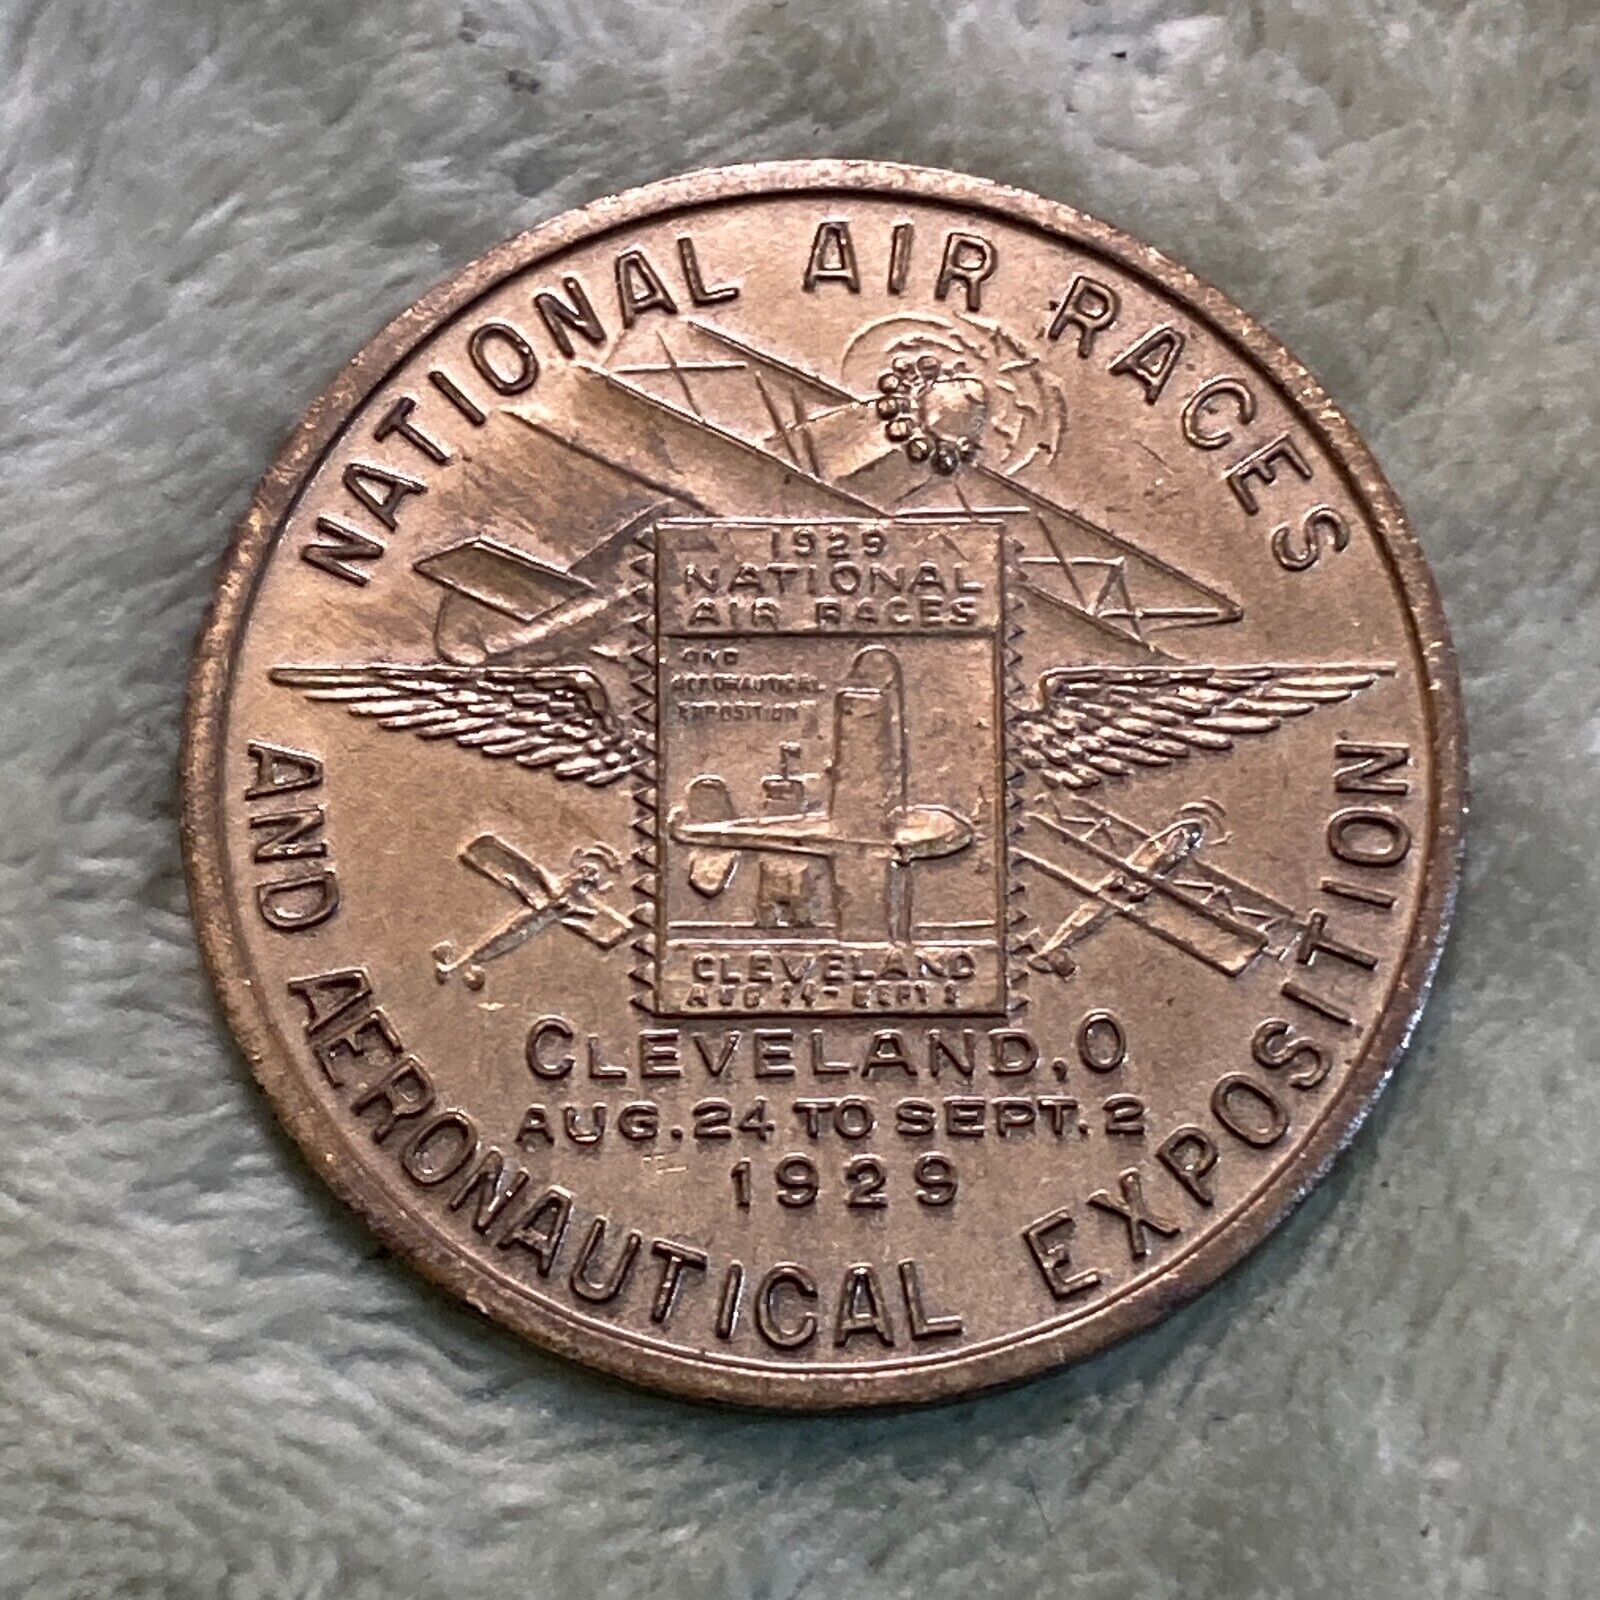 1929 National Air Races and Aeronautical Exposition Cleveland Souvenir Medallion